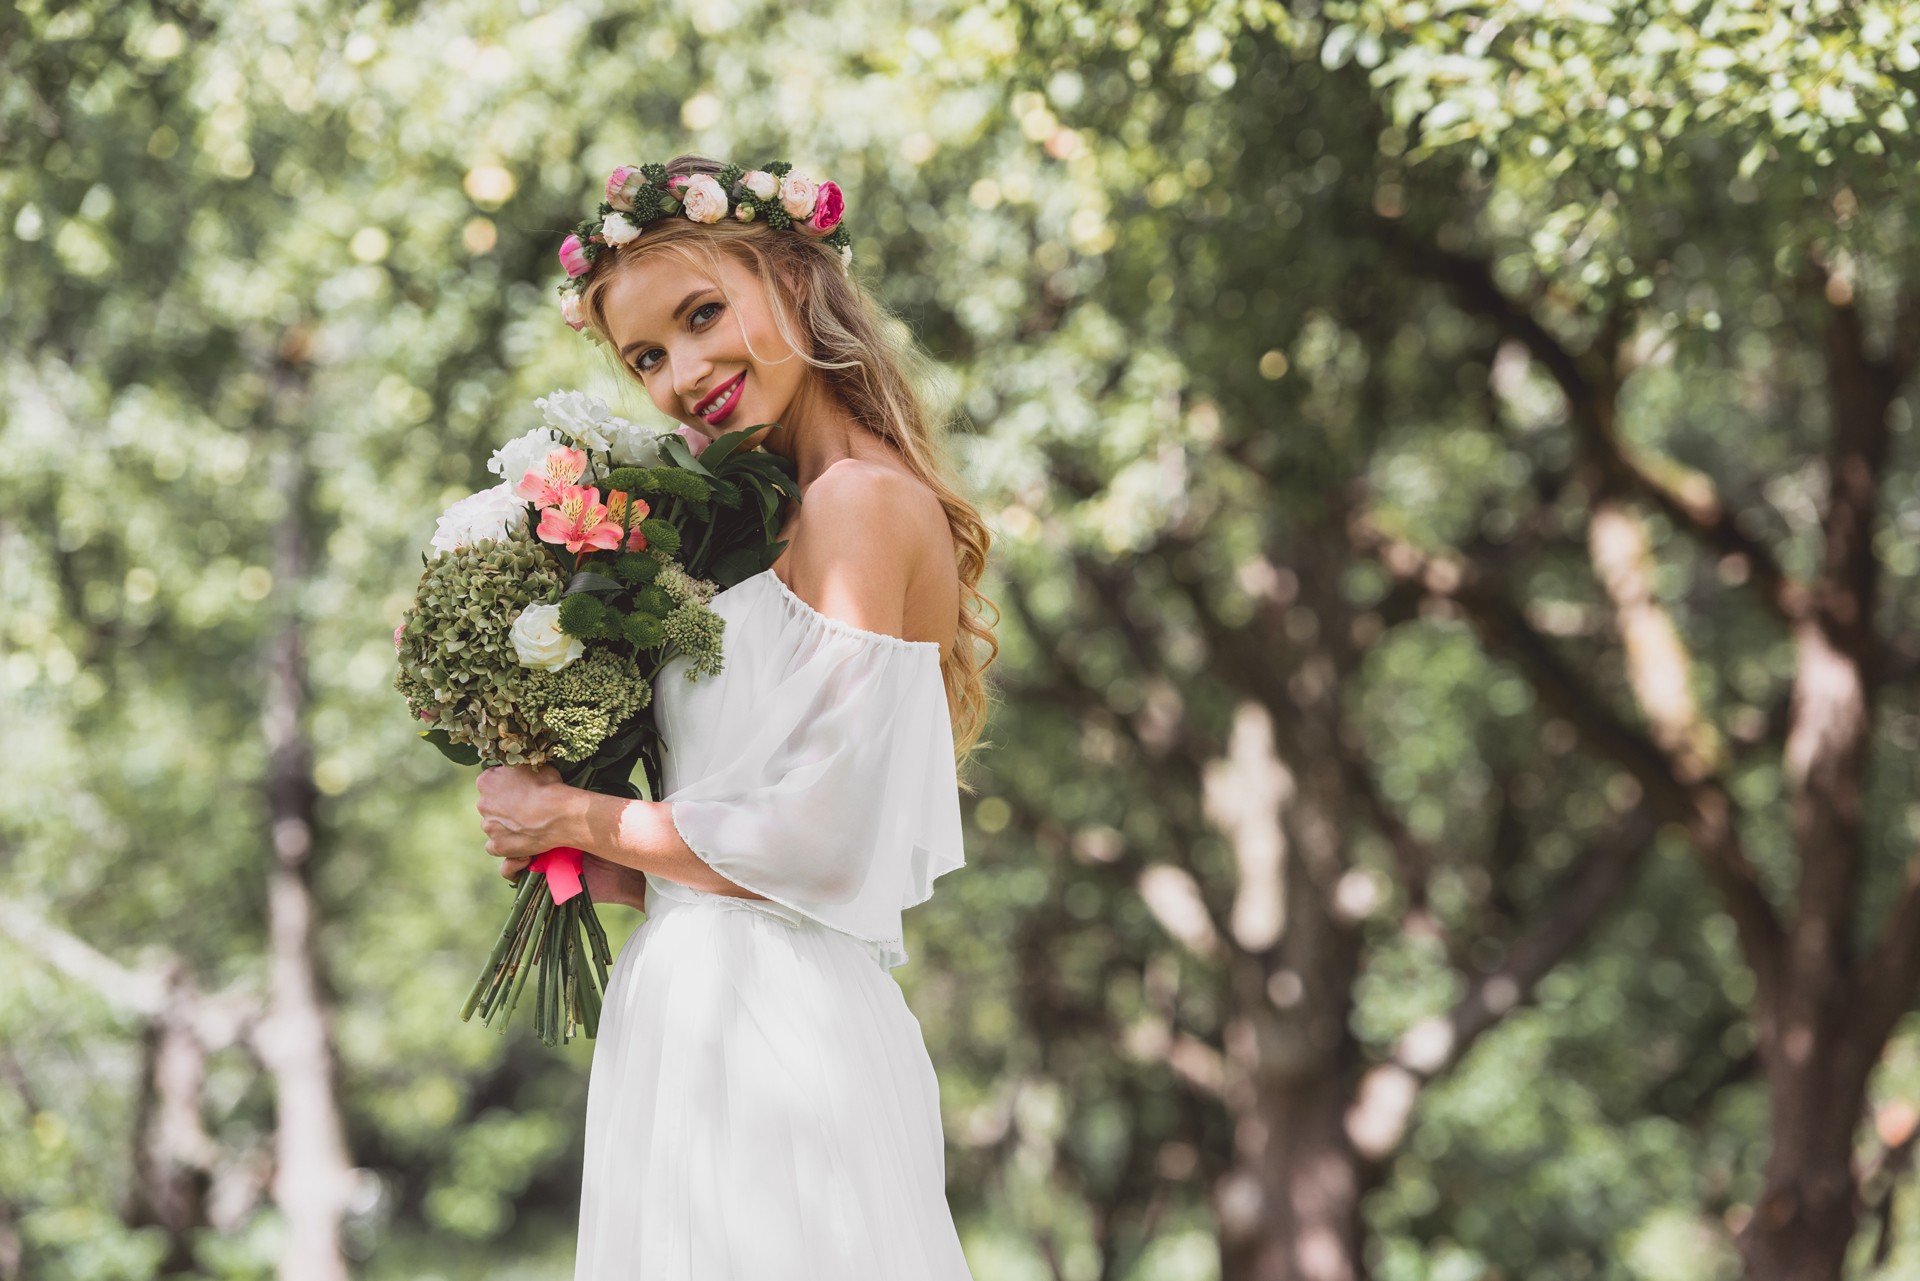 https://gardeniaweddingcinema.com/european-dating-culture/ukrainian-dating-culture/